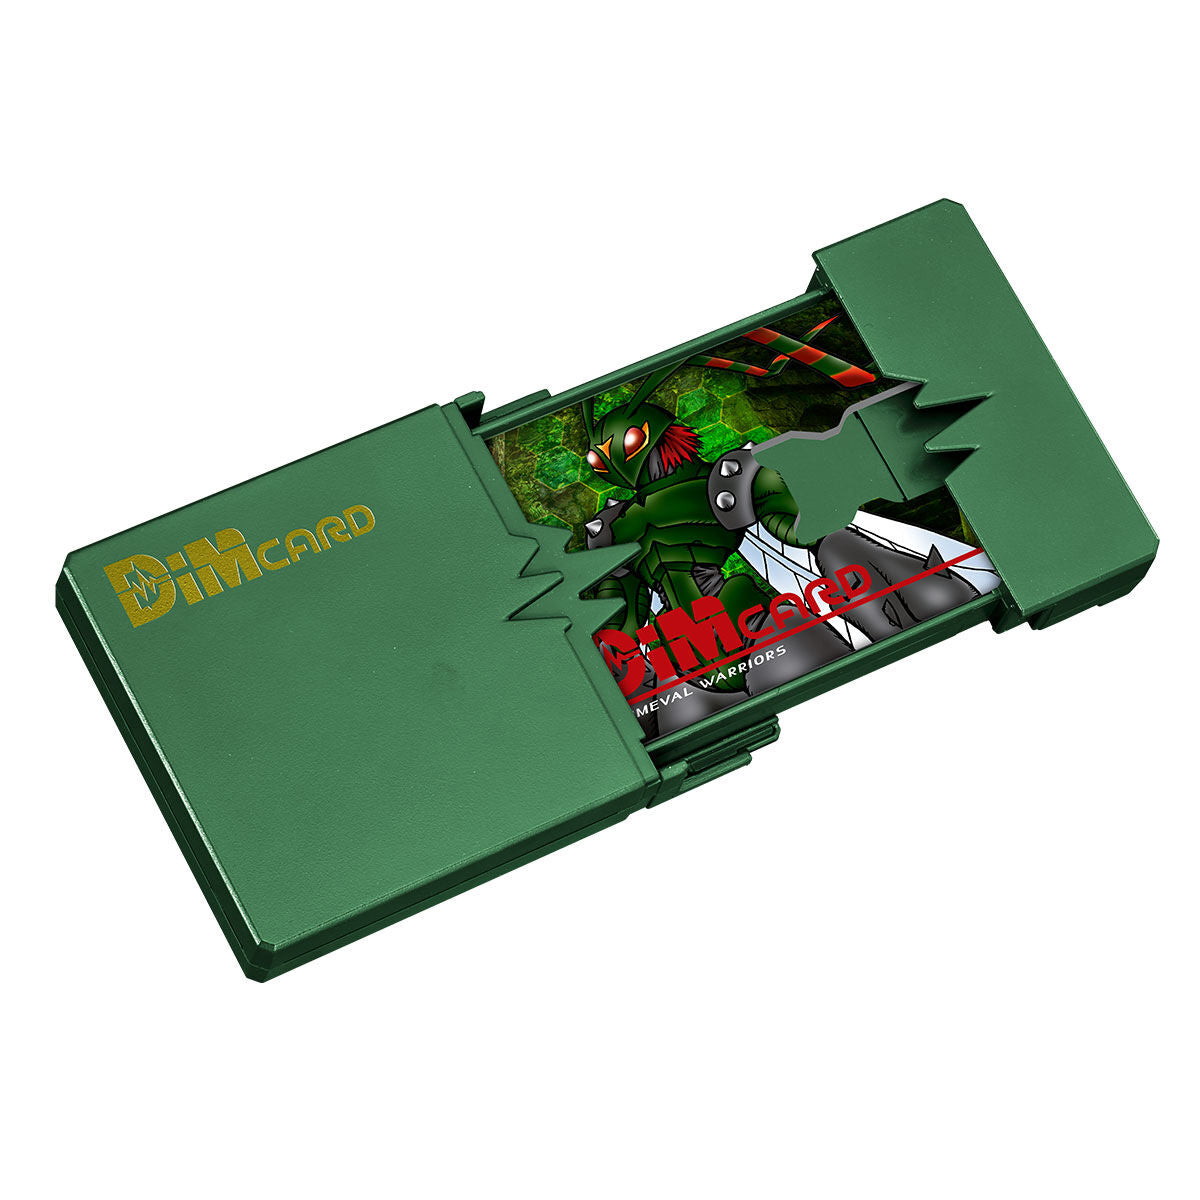 Digimon Dim Card Holster Vol 02 & Primeval Warriors Dim Card